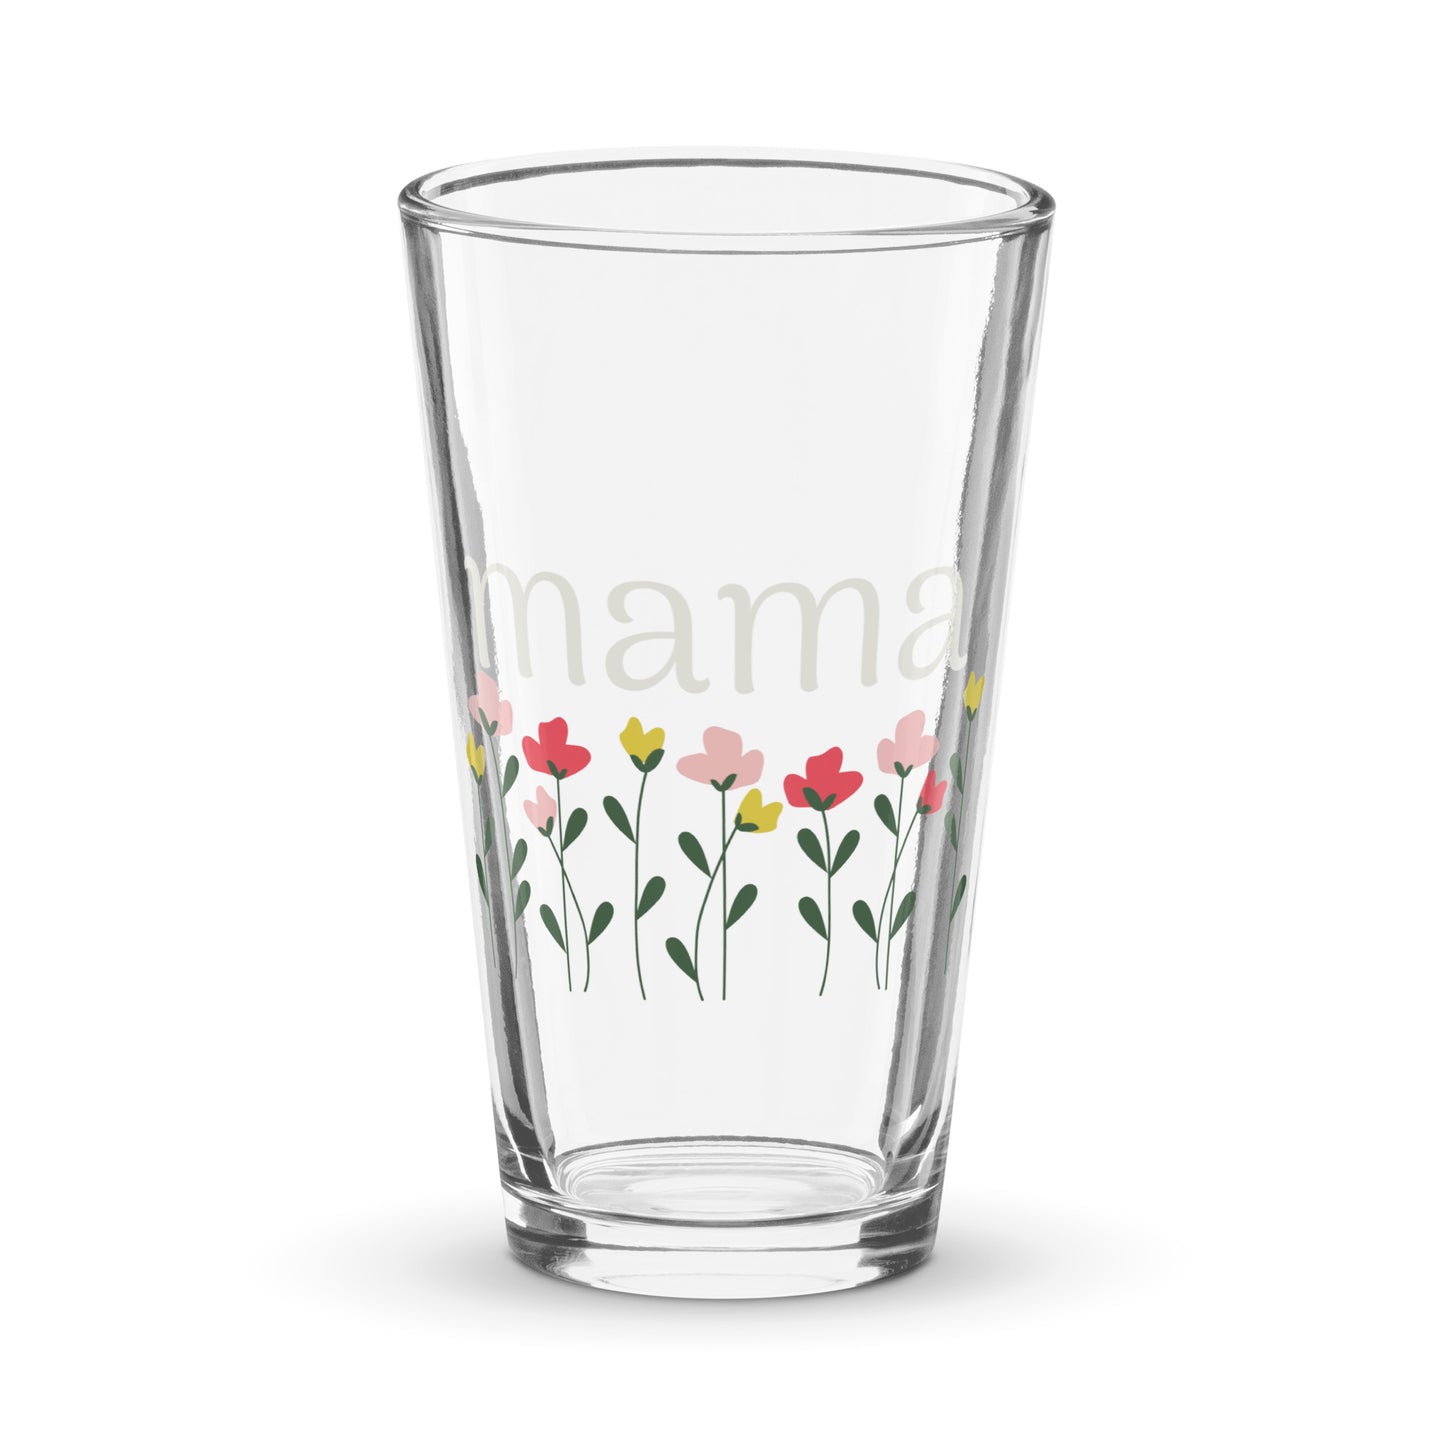 Mama - Pint Glass,  by The Banannie Diaries - Volume: 16 oz. (473 ml), Glassware, Houseware